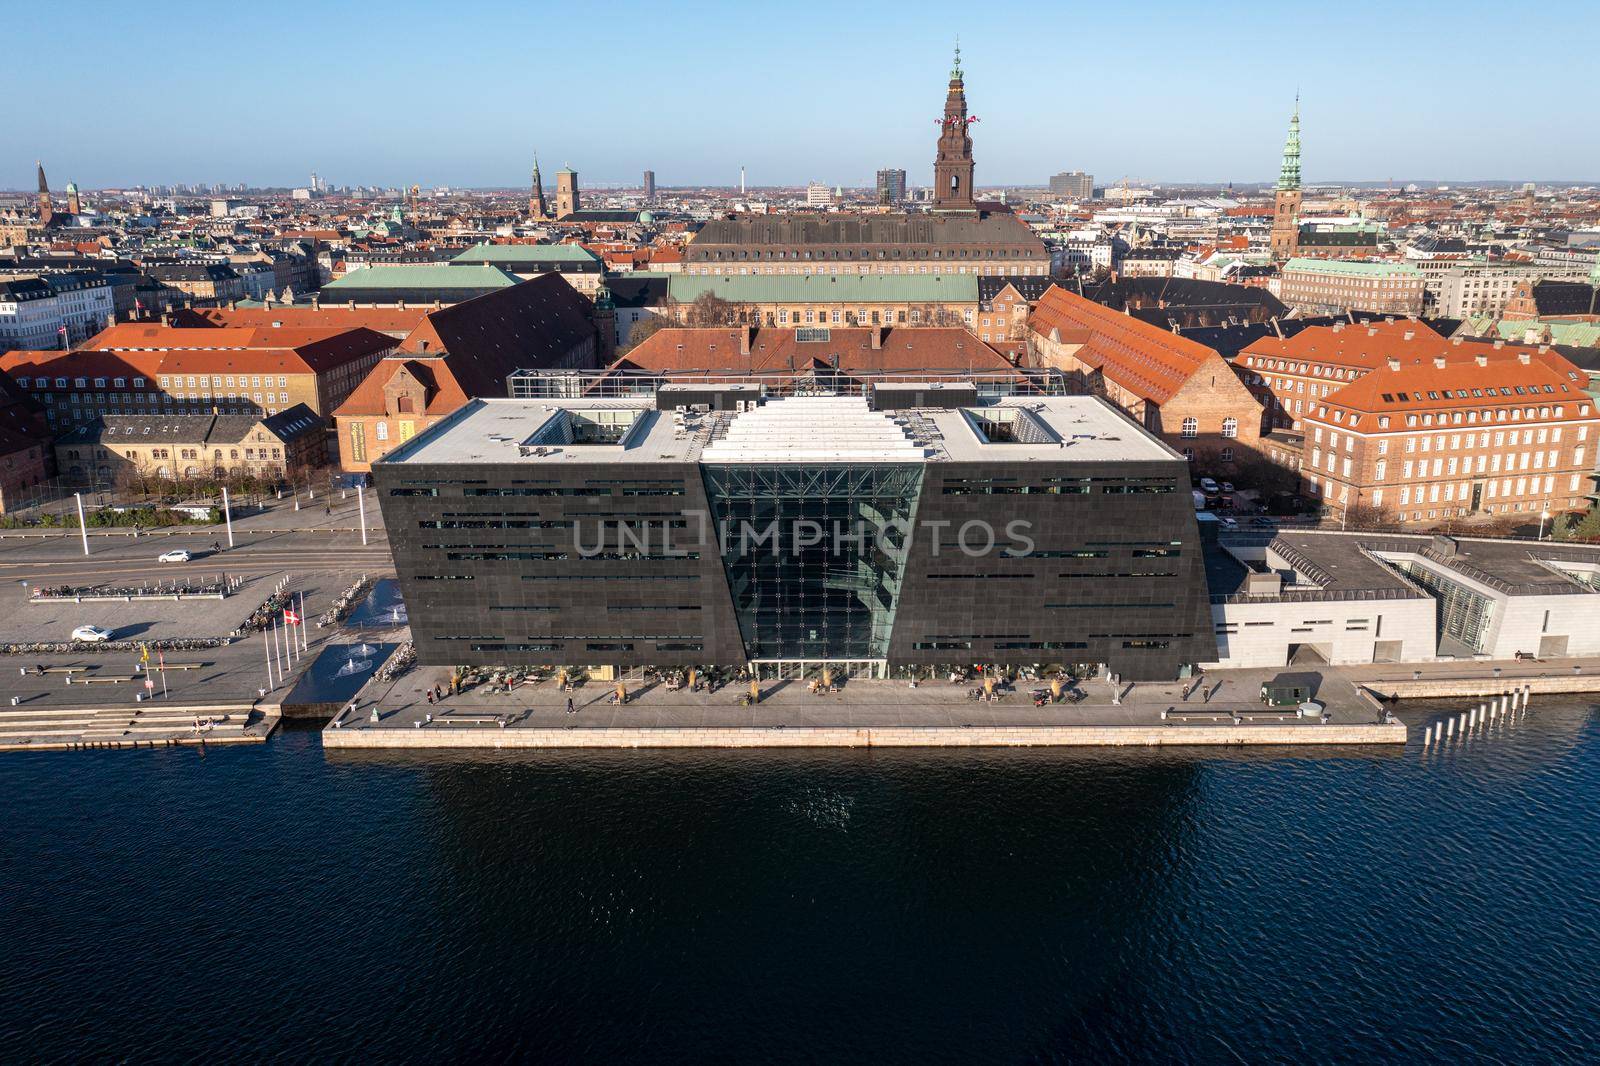 Aerial View of Royal Library in Copenhagen, Denmark by oliverfoerstner